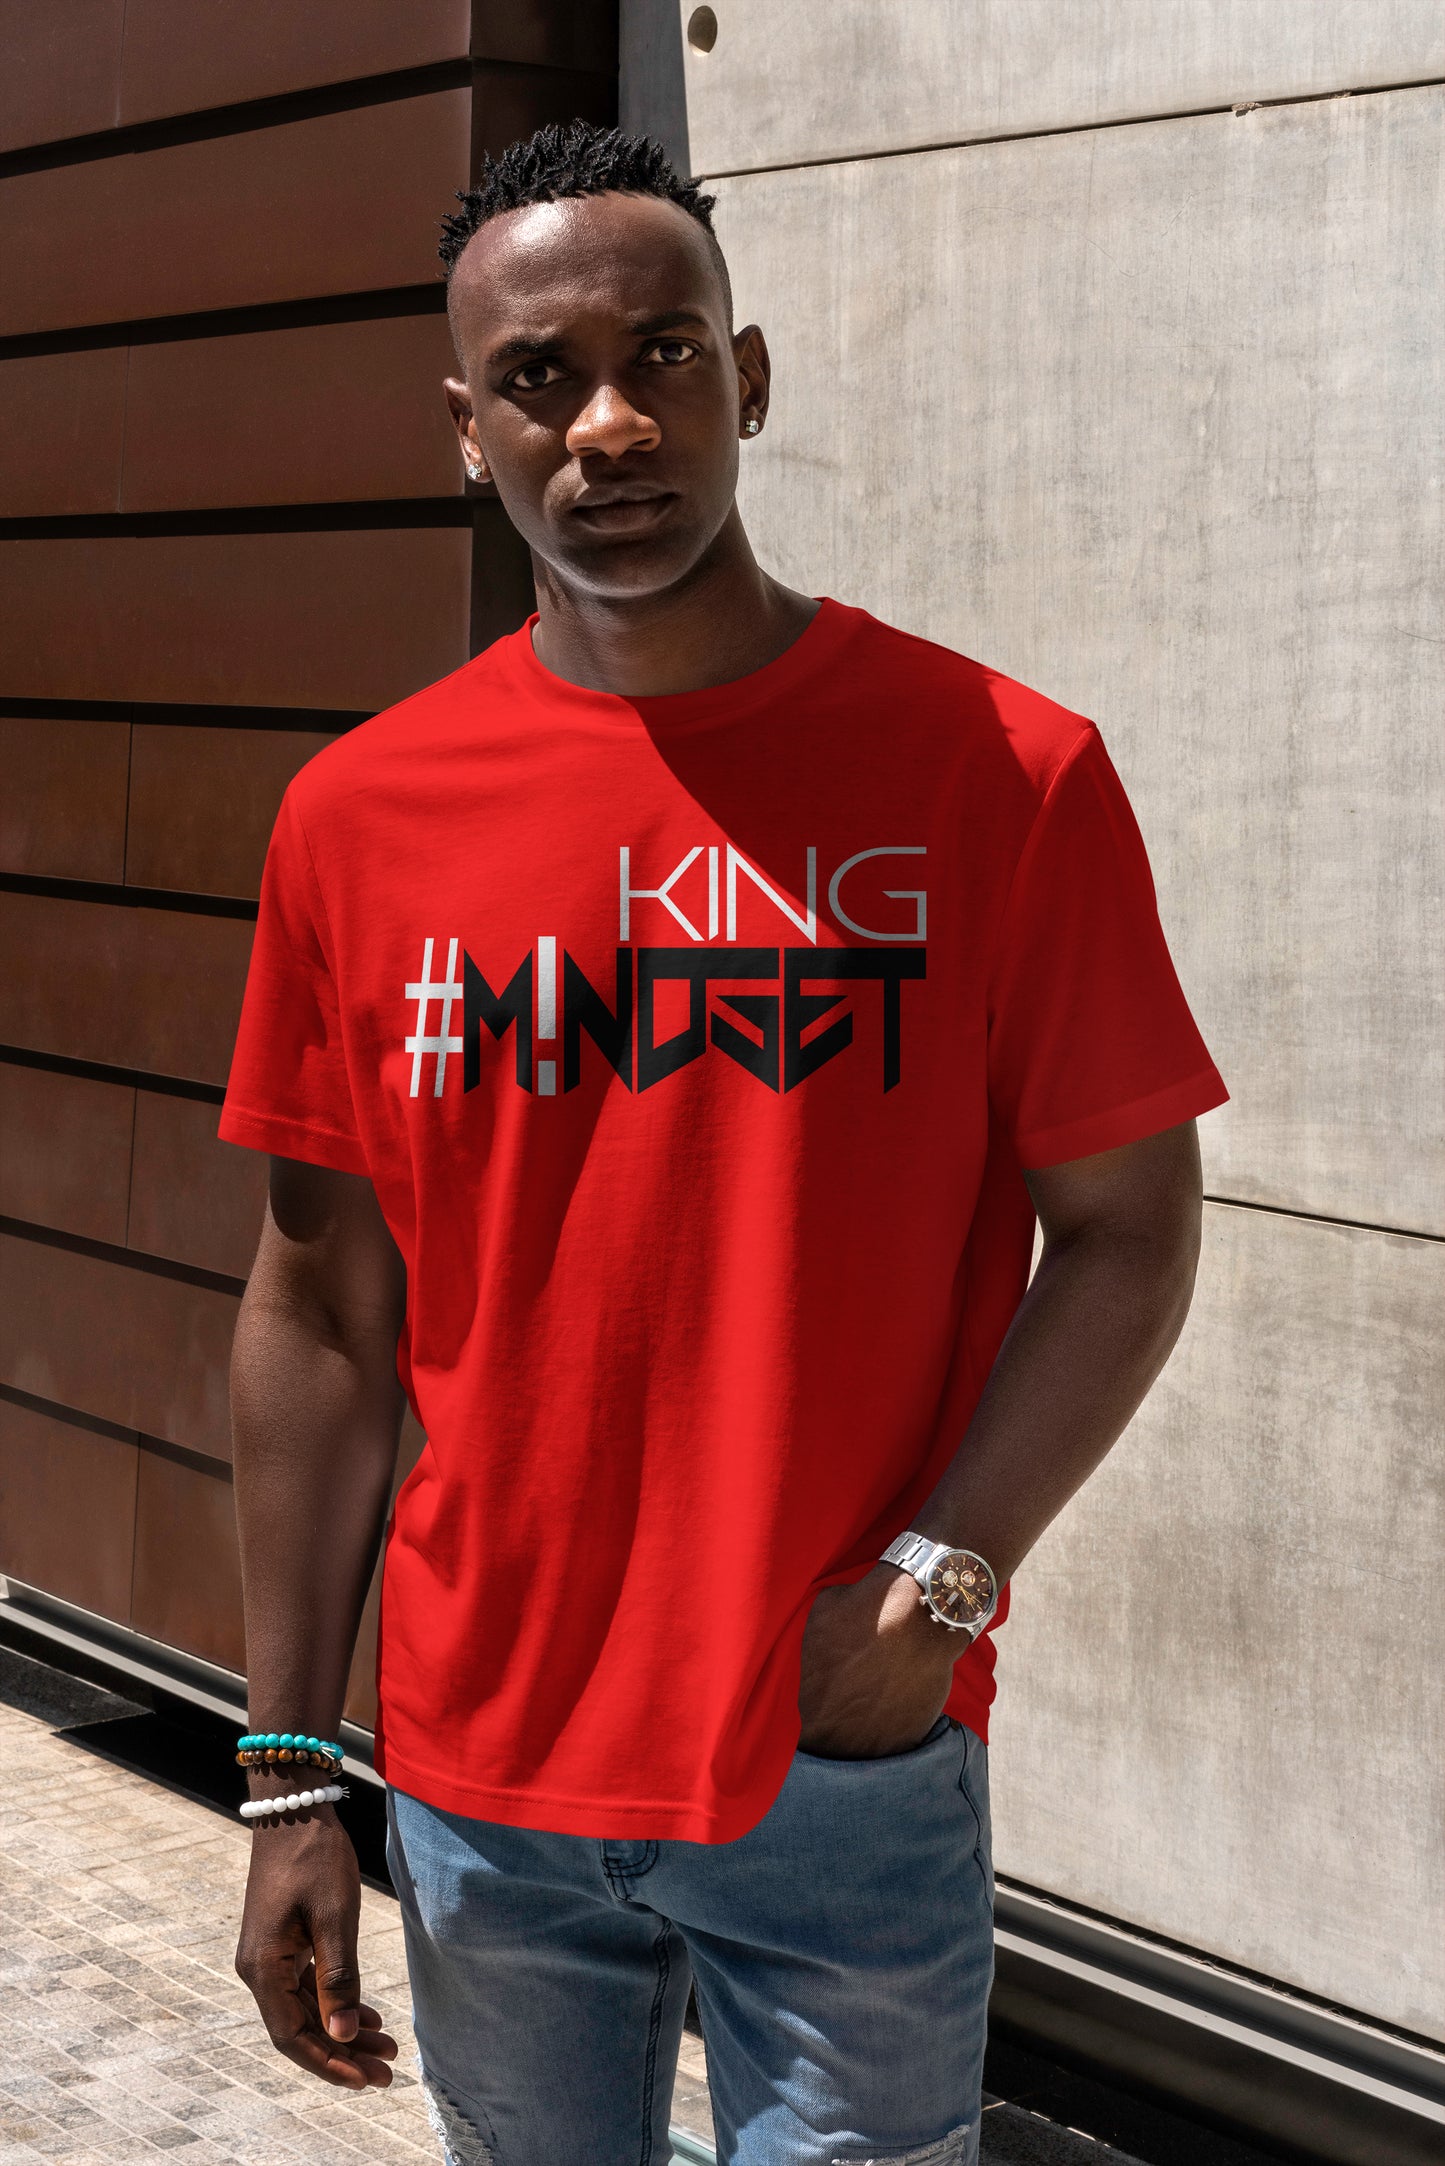 King Mindset T-Shirt